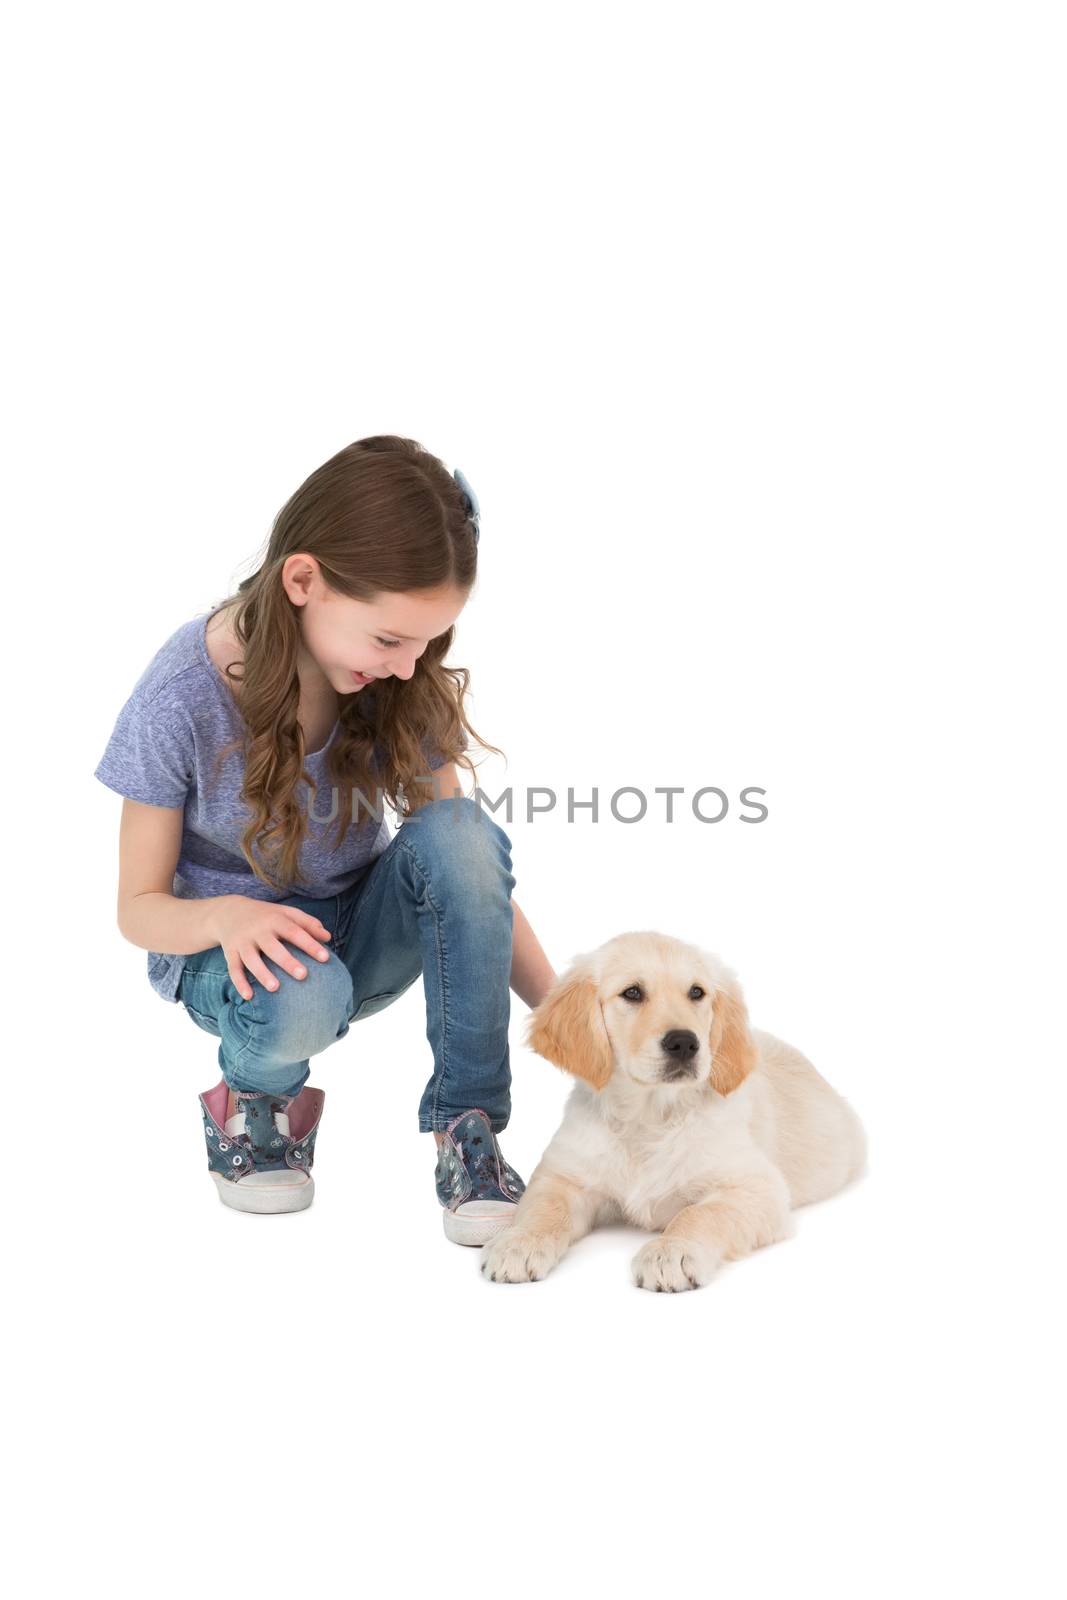 Crouching little girl next dog on white background